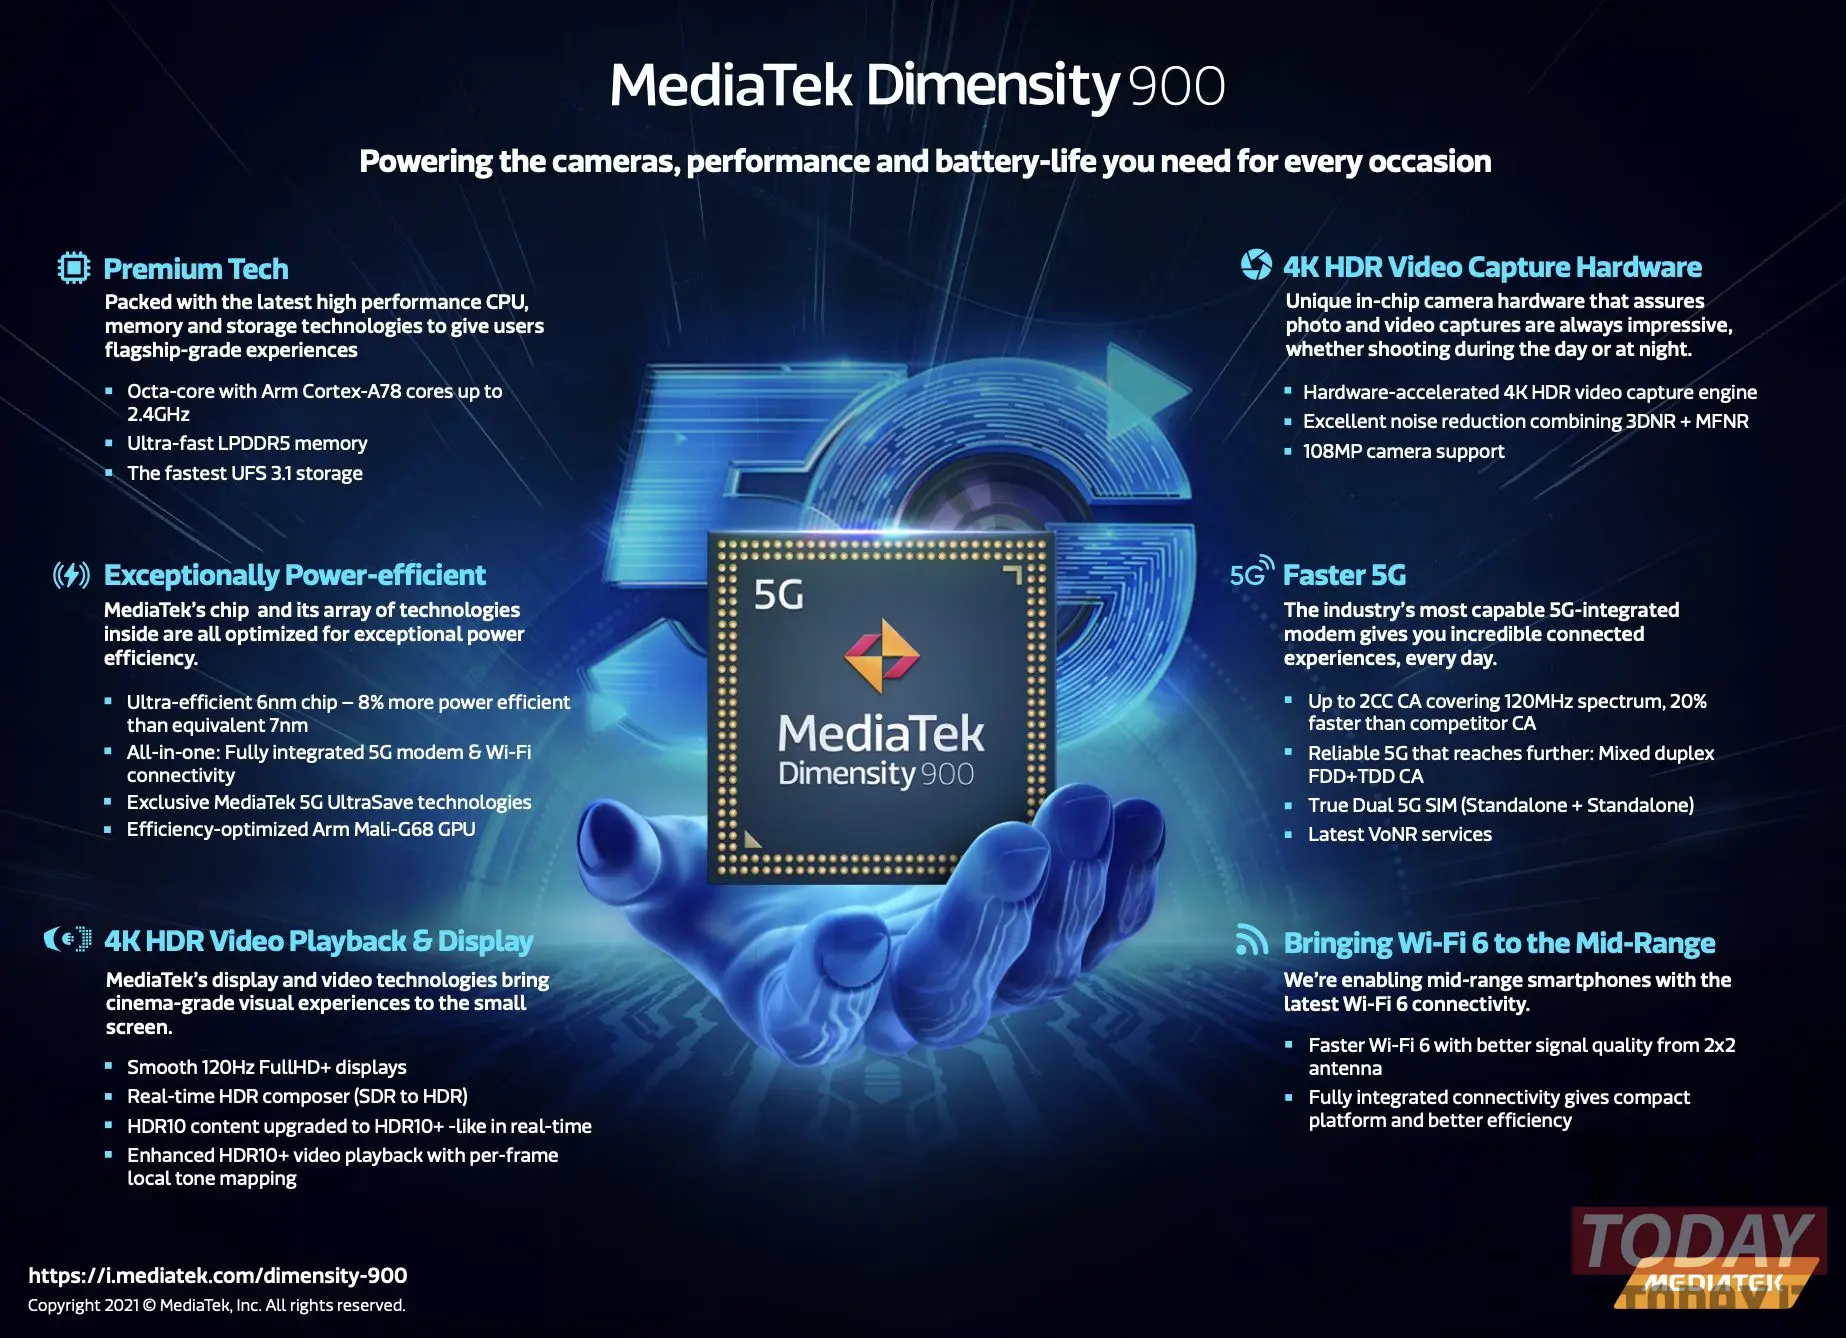 mediatek dimensity 900 5g ufficiale: tutte le caratteristiche